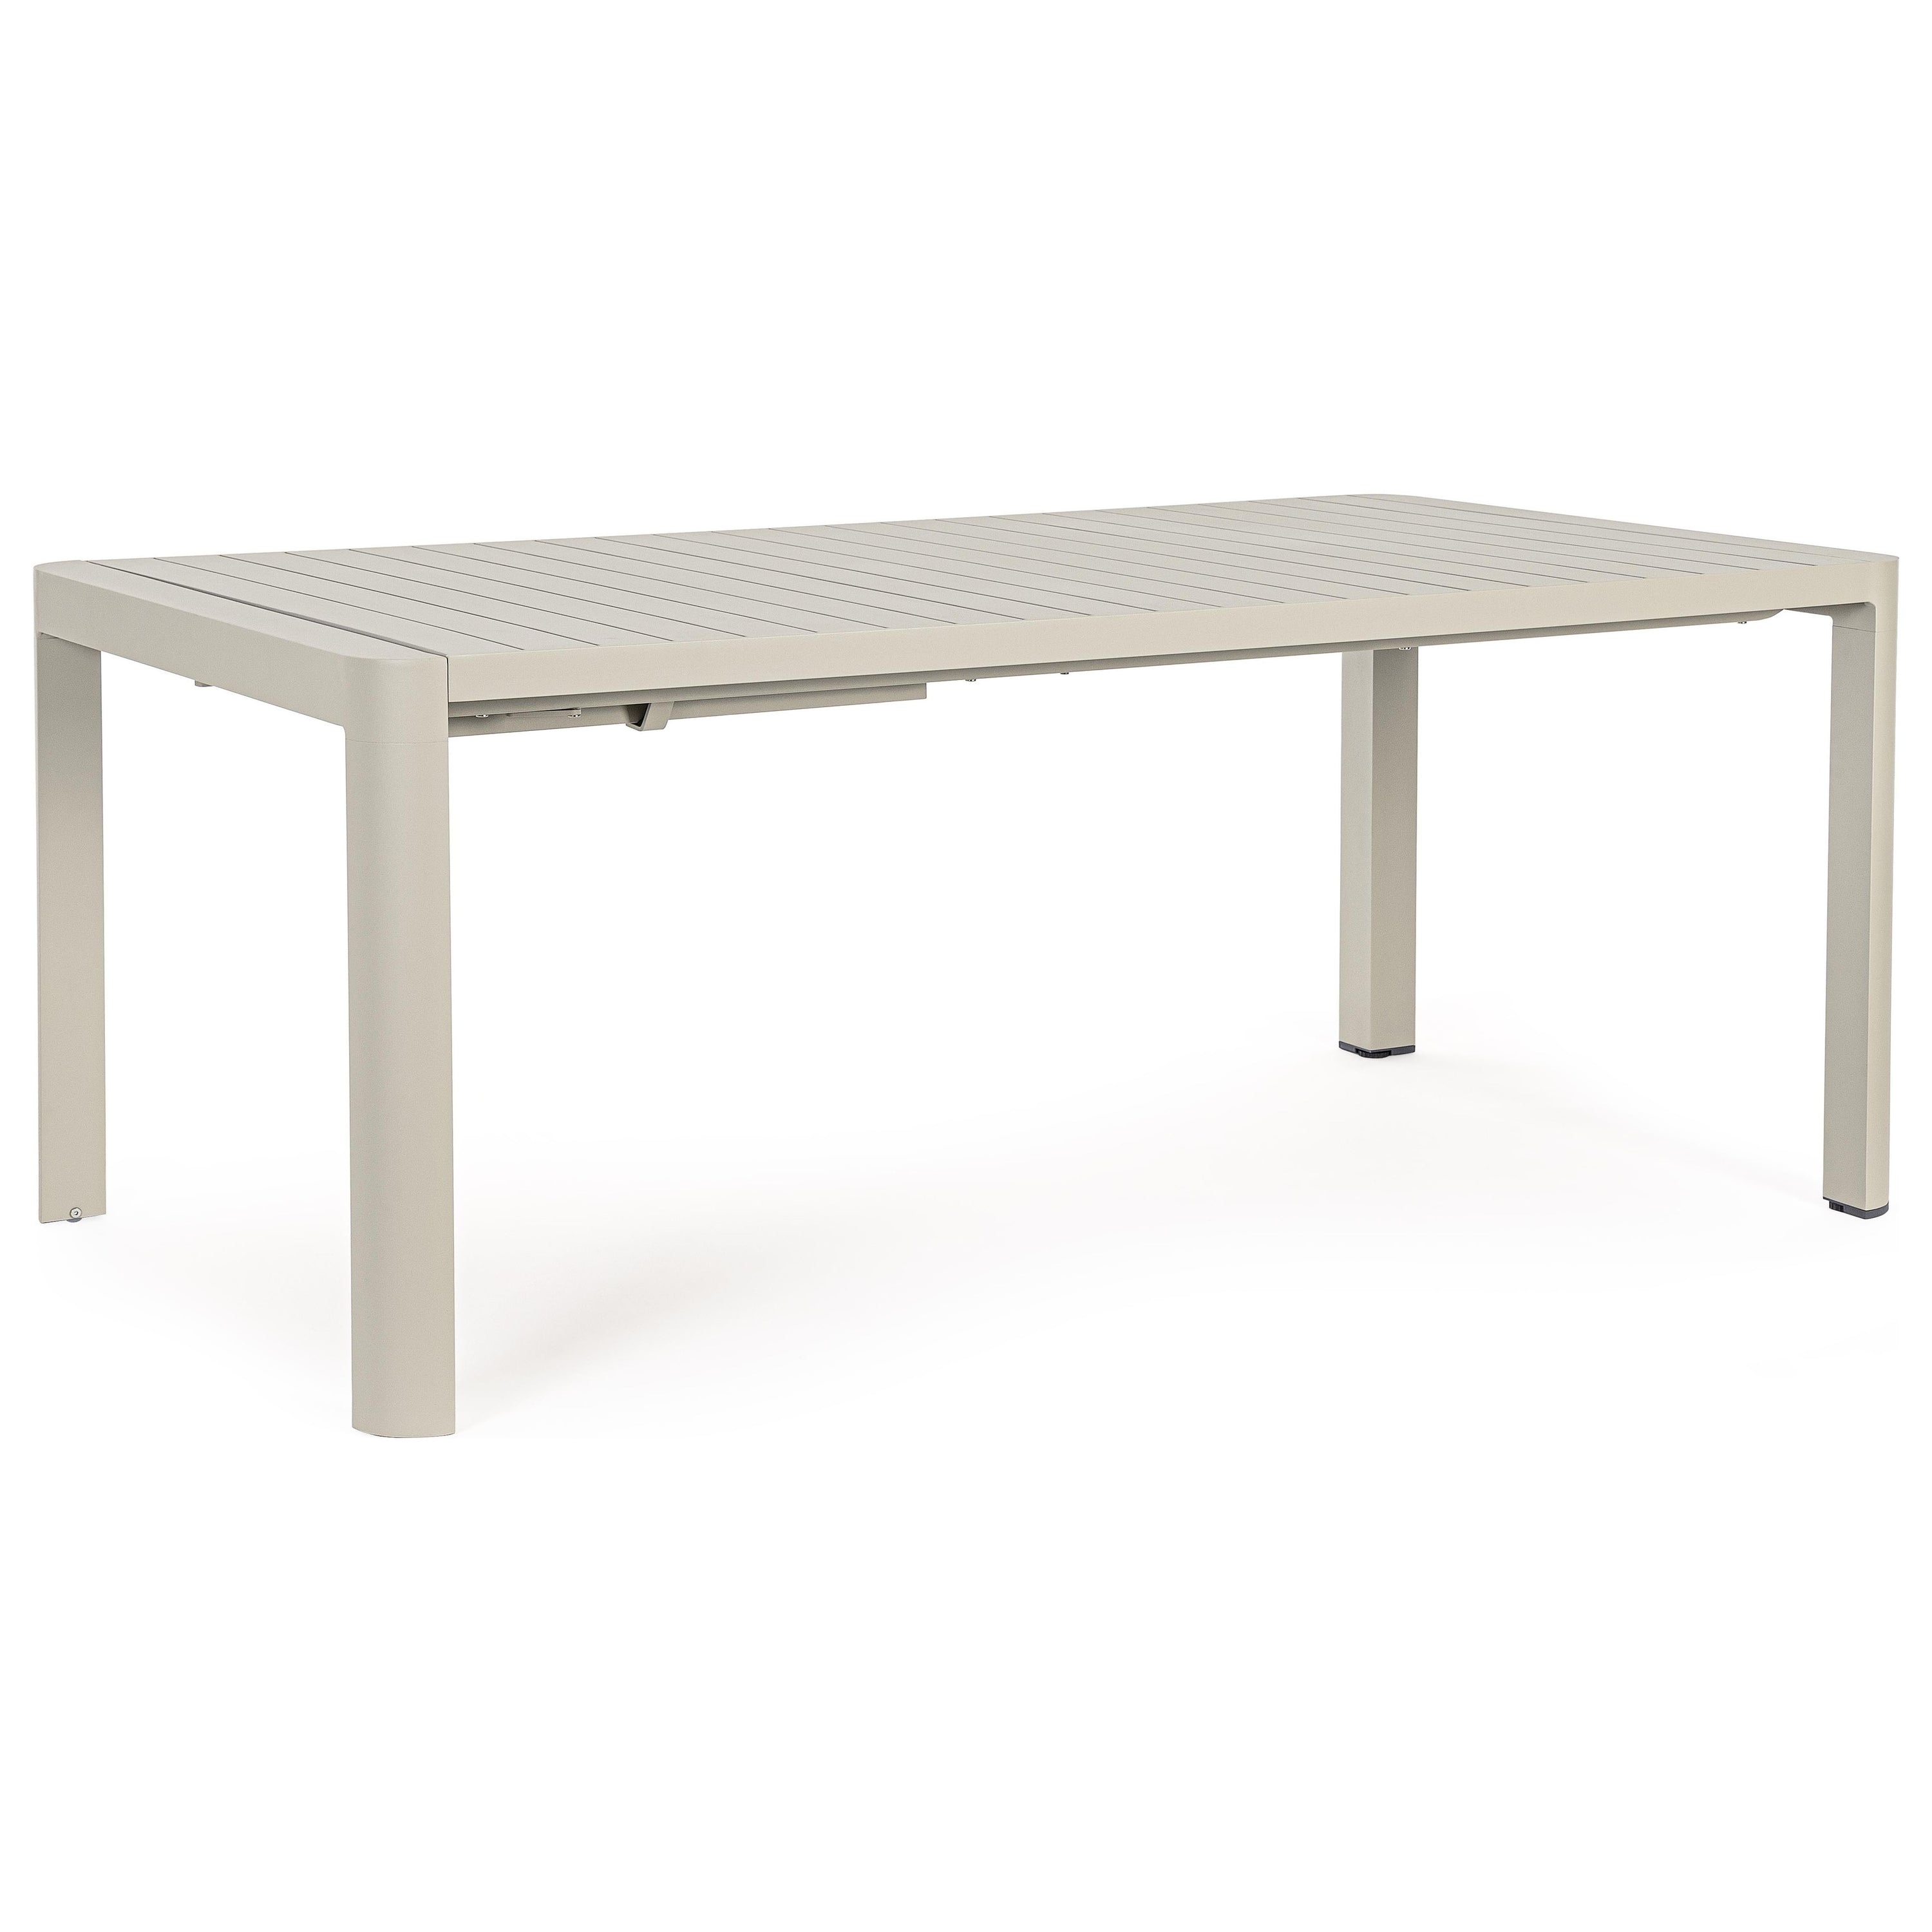 KIPLIN prasiilginantis lauko valgomojo stalas, 180-240x100cm, smėlio spalva